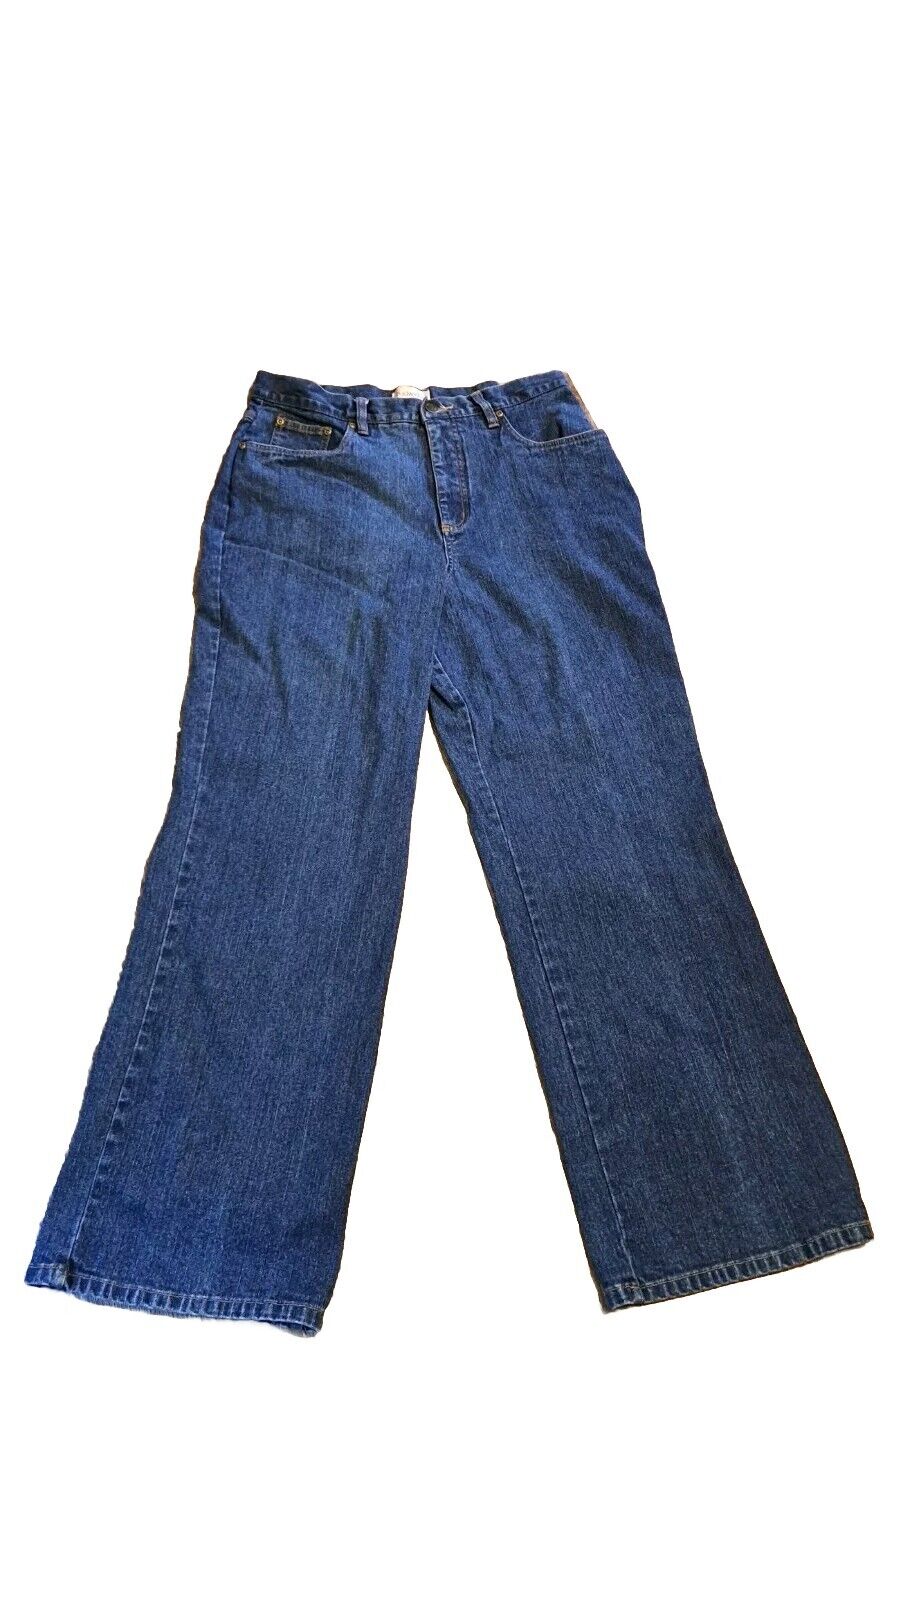 Chadwicks Bootcut Jeans Women's Size 14 Blue 5-Pocket High Rise Medium Wash